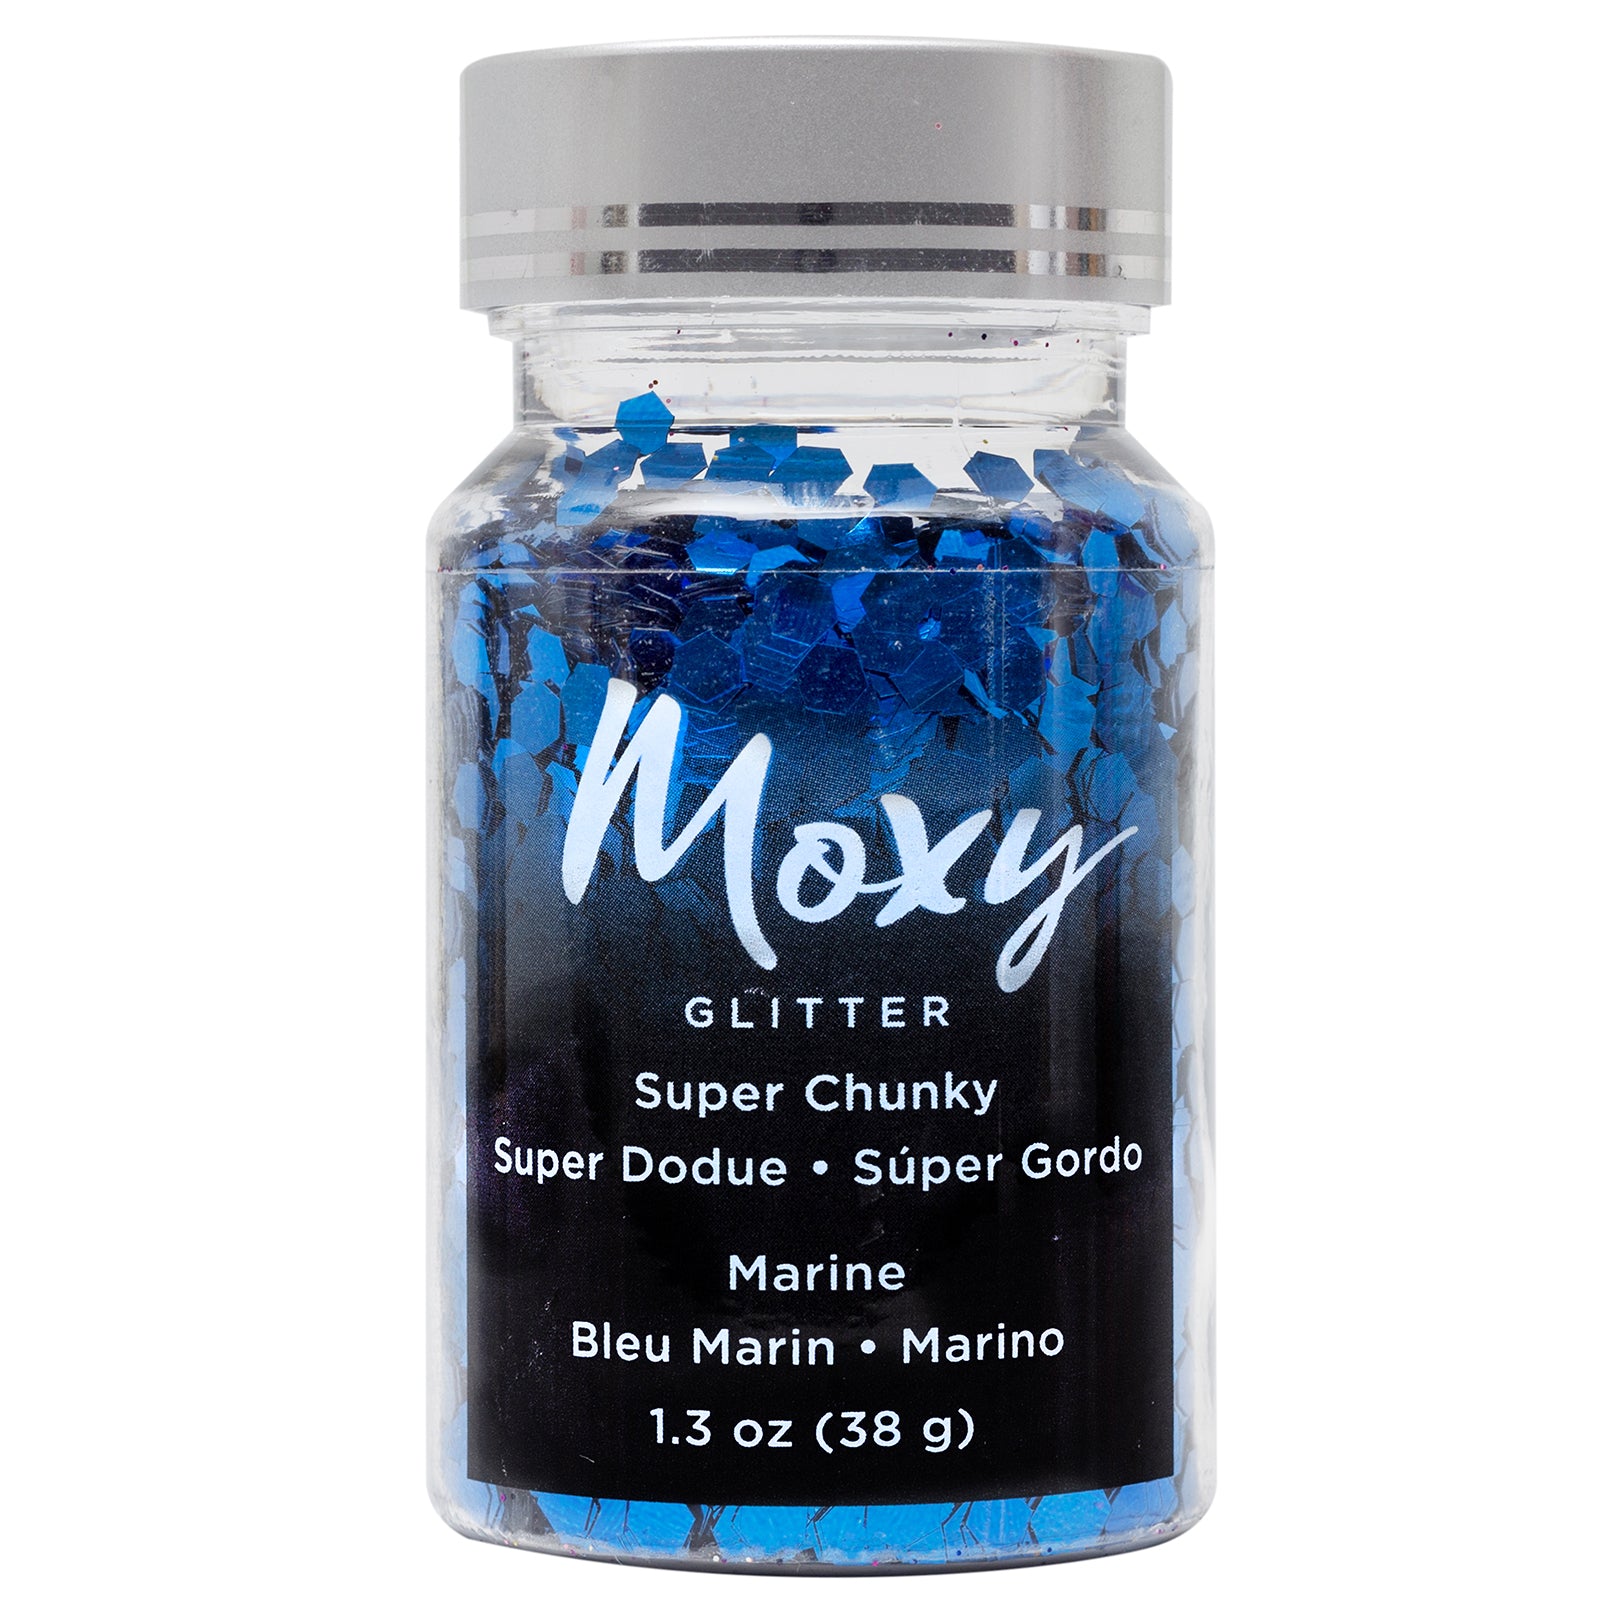 Moxy Glitter Super Chunky - Marine 1 oz+ Bottle - CraftCutterSupply.com